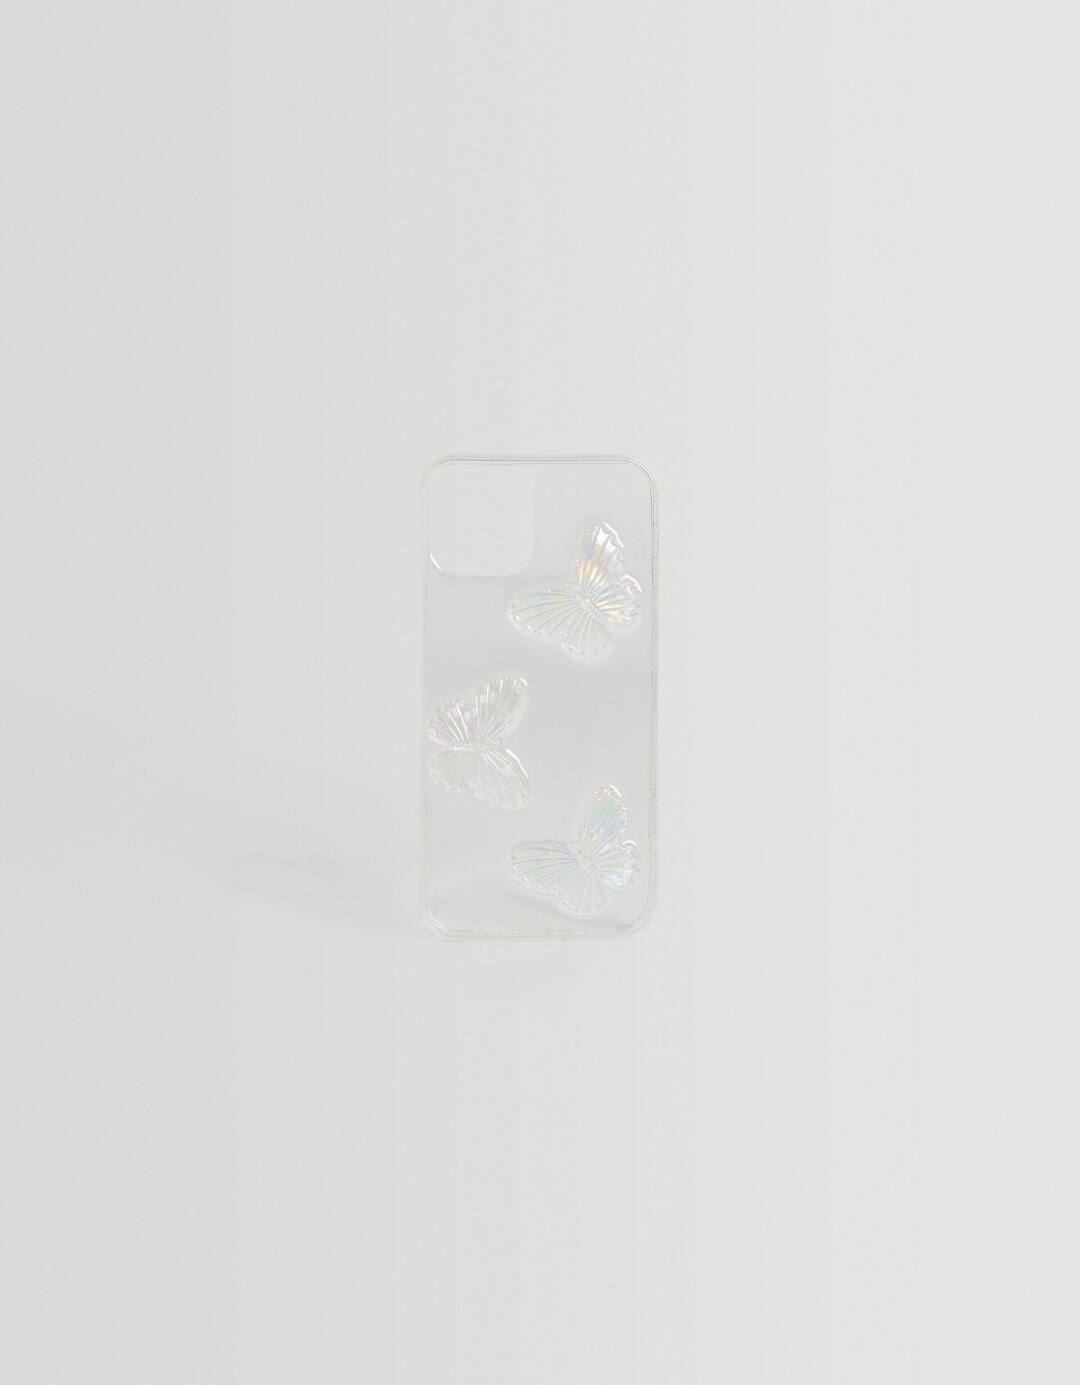 Carcasa móvil iPhone mariposas iridiscentes